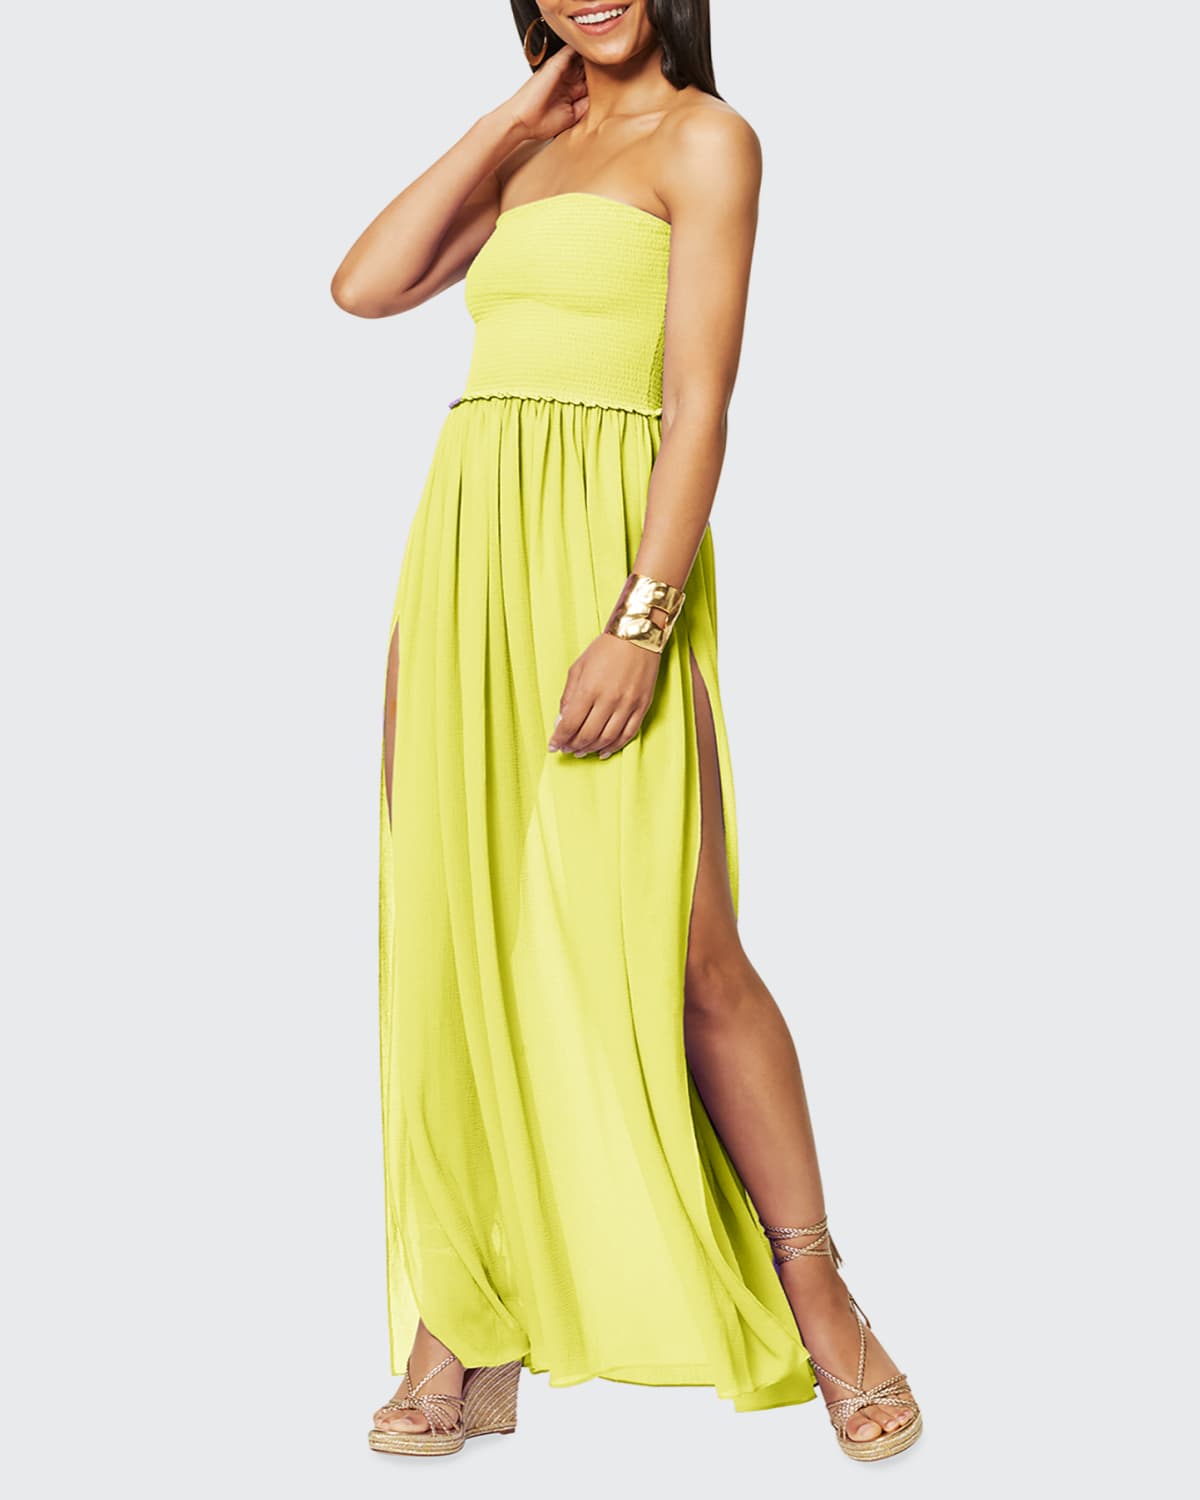 Calista Smocked Strapless Side-Split Coverup Dress